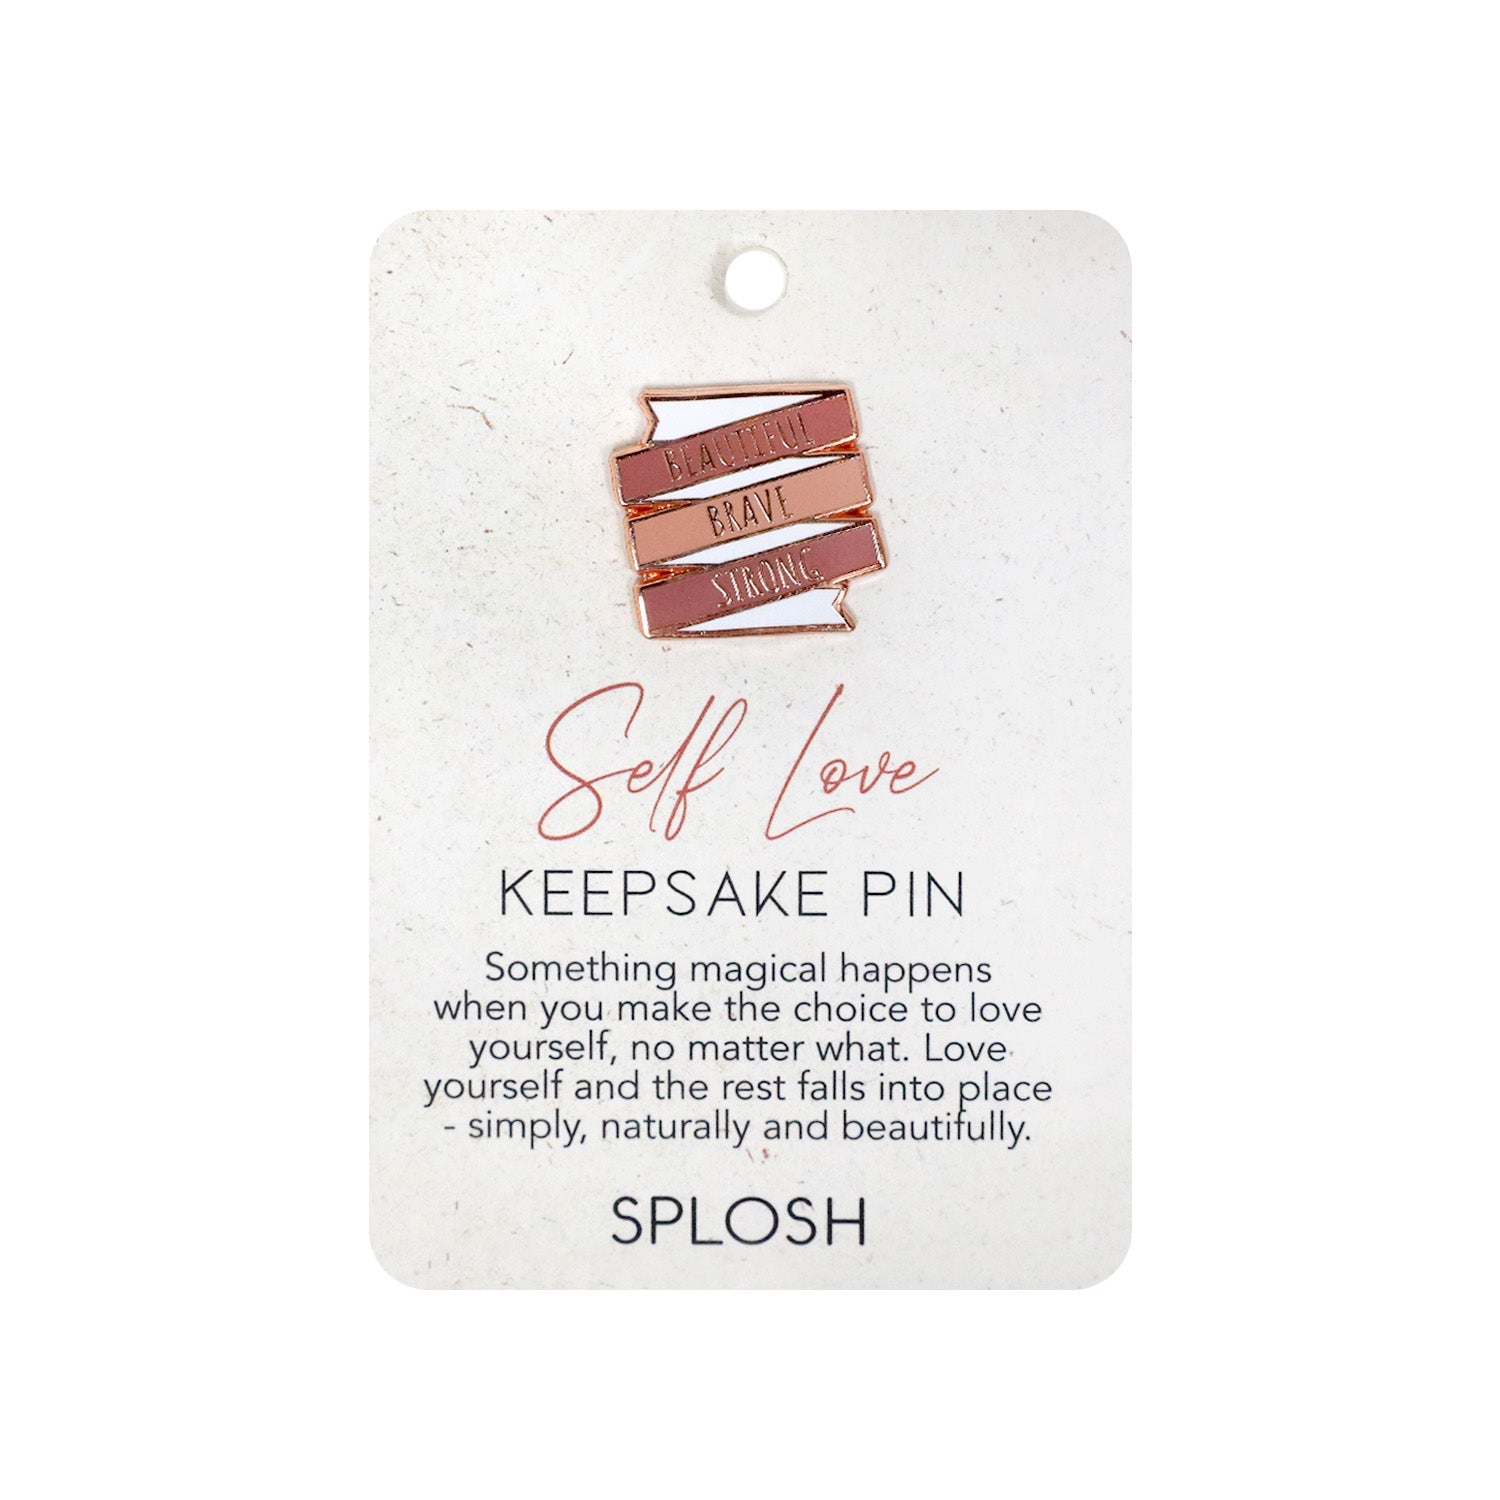 Splosh Self love Keepsake Pin